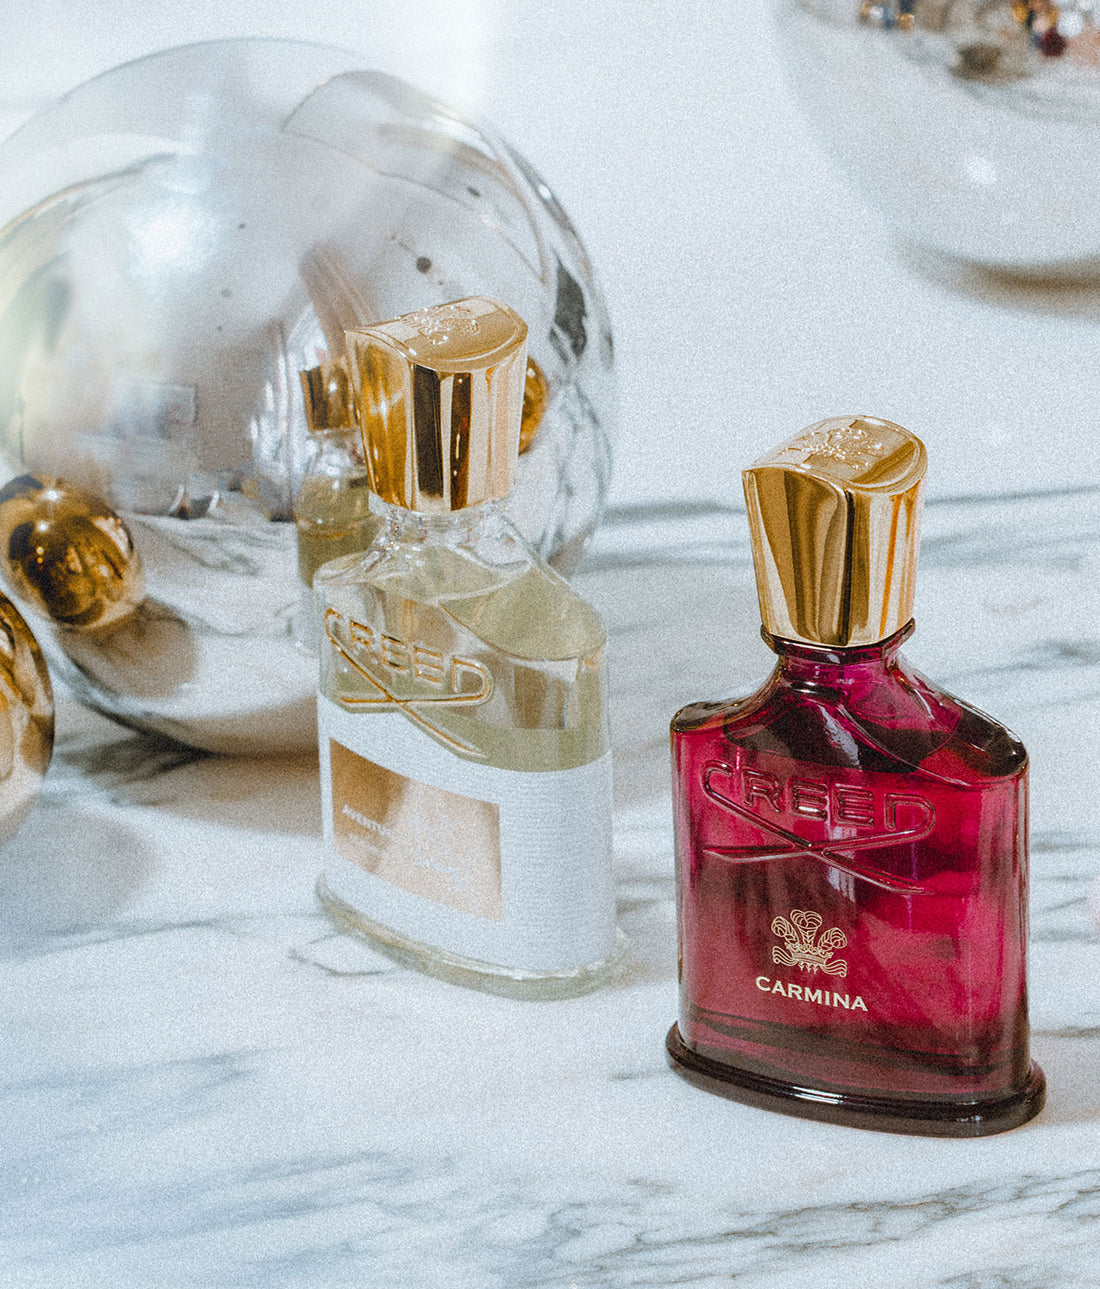 Official Creed Fragrance UK | Luxury Perfume For Men & Women